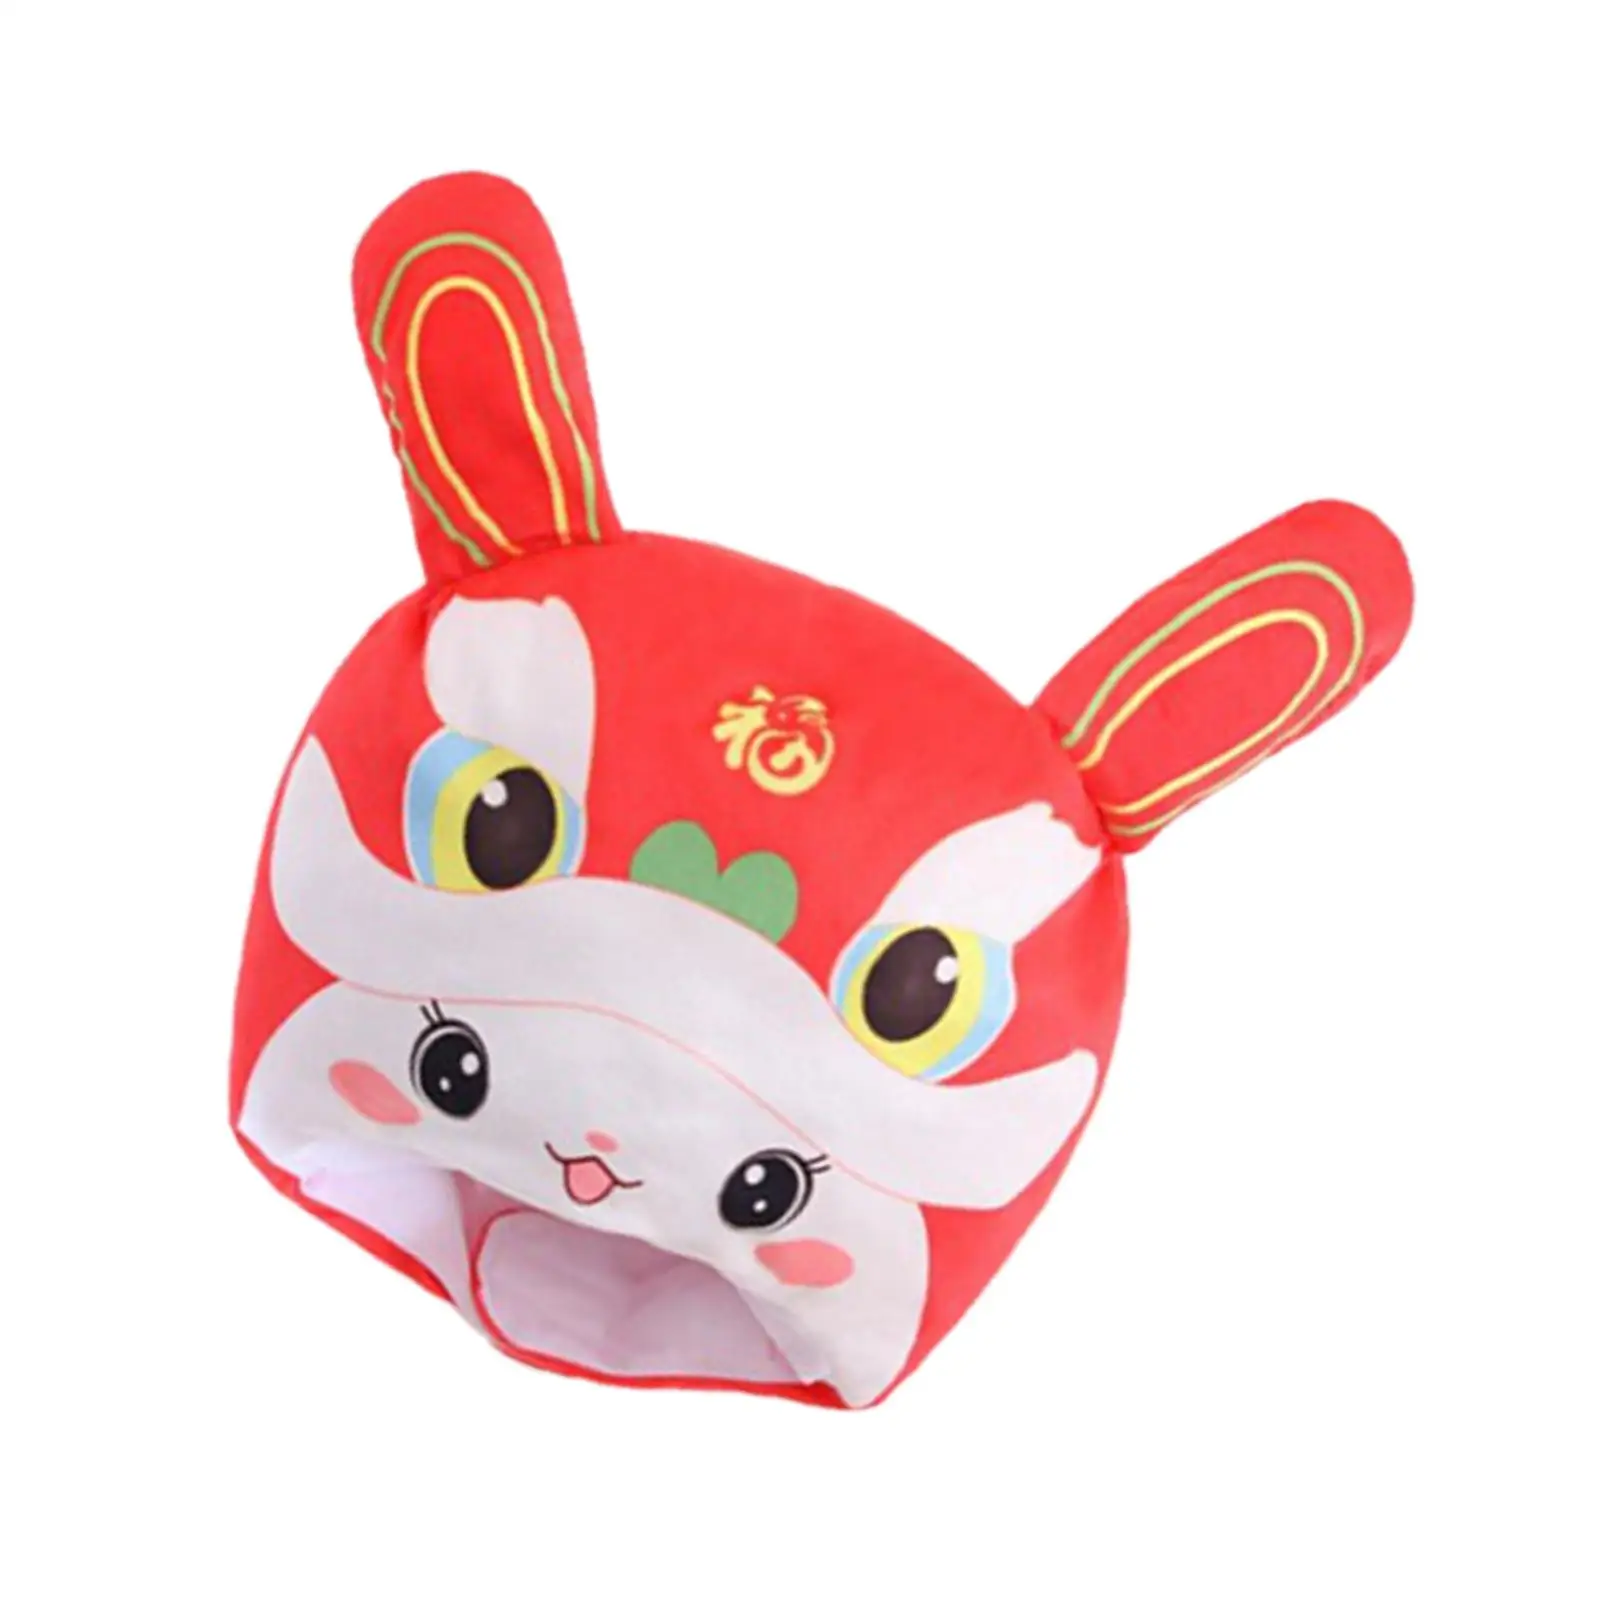 Lion Rabbit Plush Hat Creative Adult Kids Headwear for Cosplay Dress